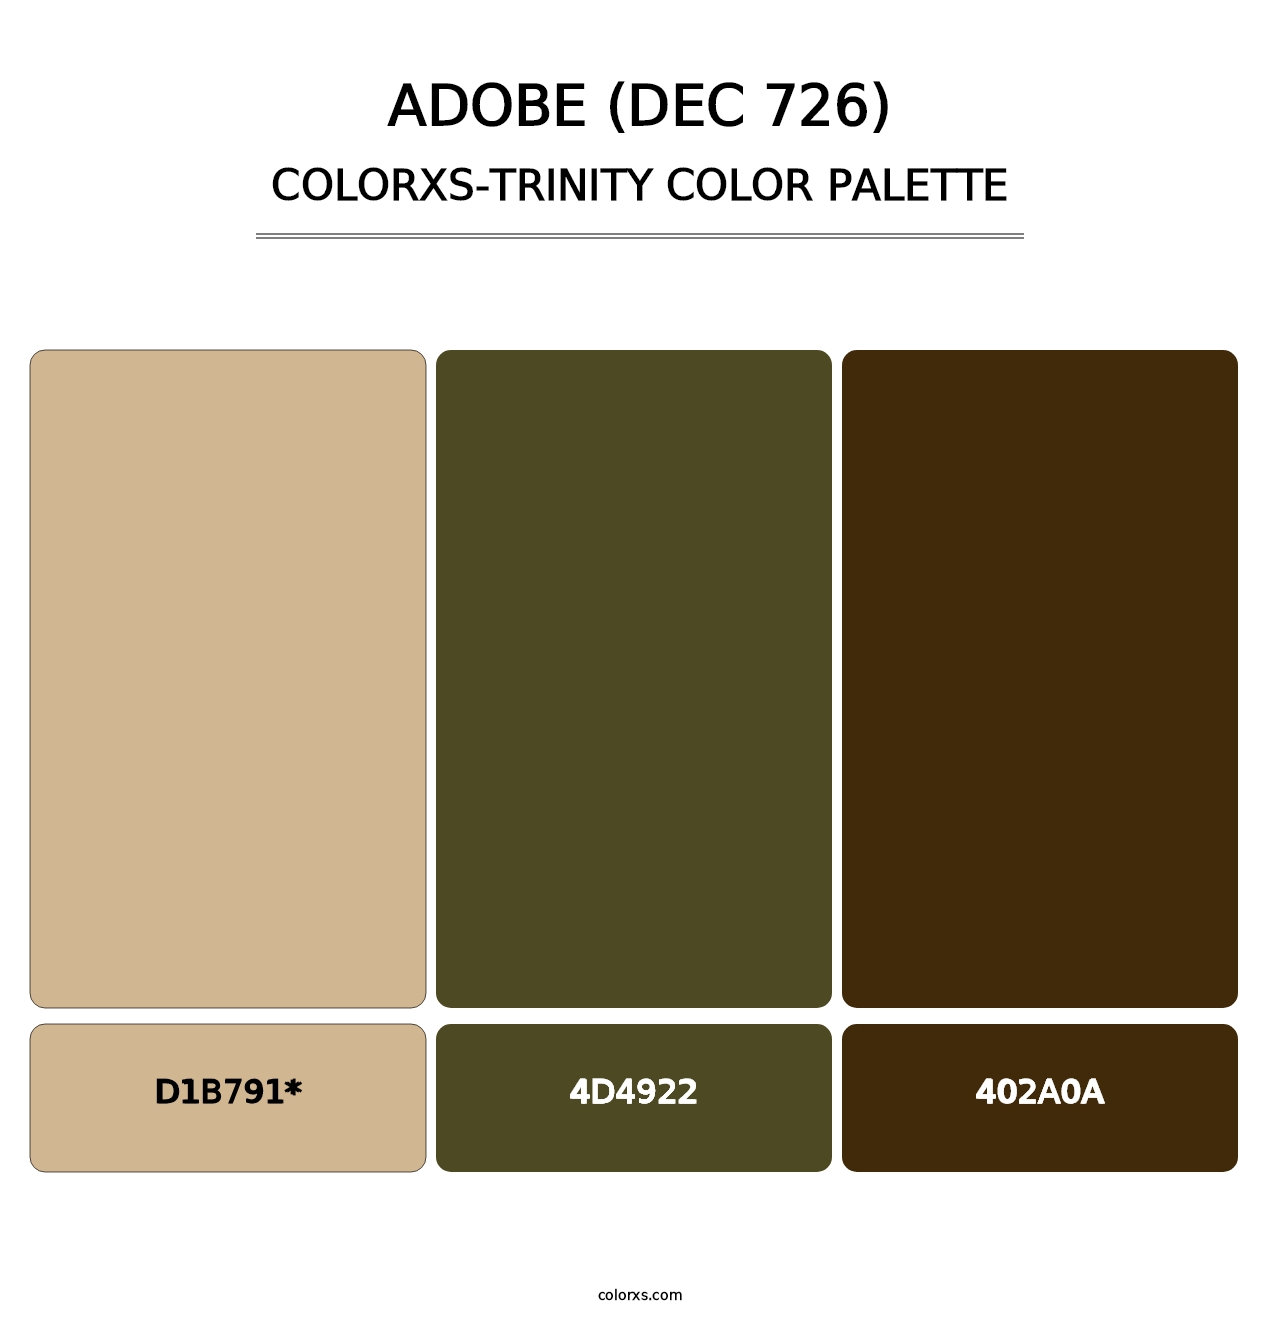 Adobe (DEC 726) - Colorxs Trinity Palette